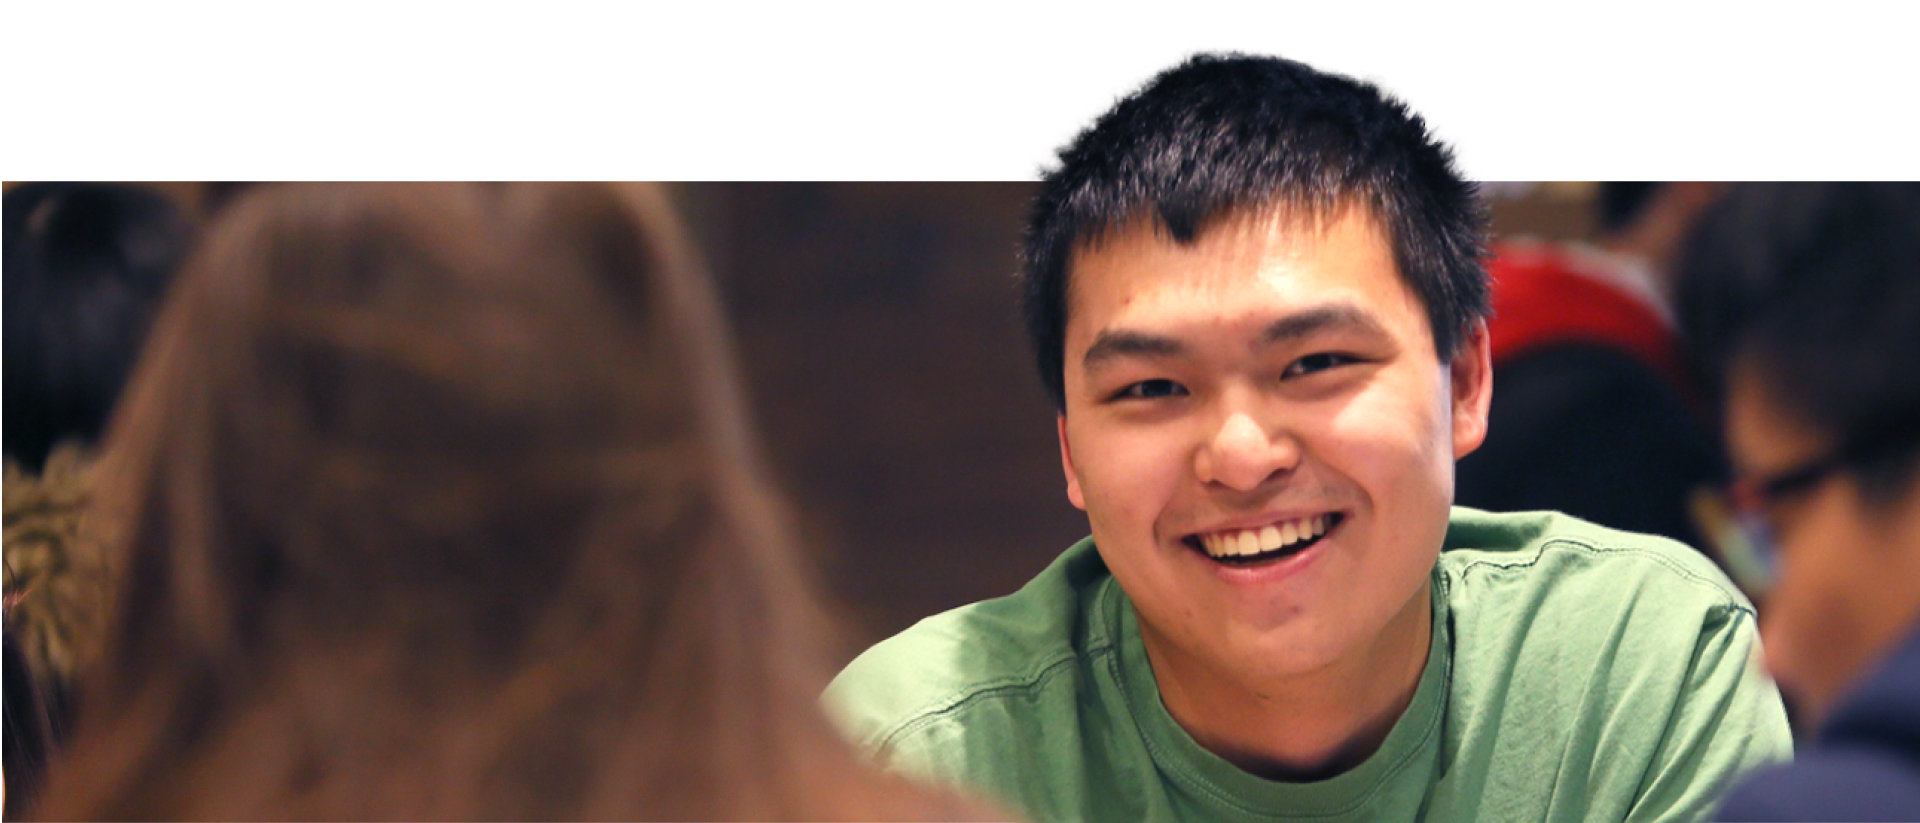 Student in green shirt smiling at camera